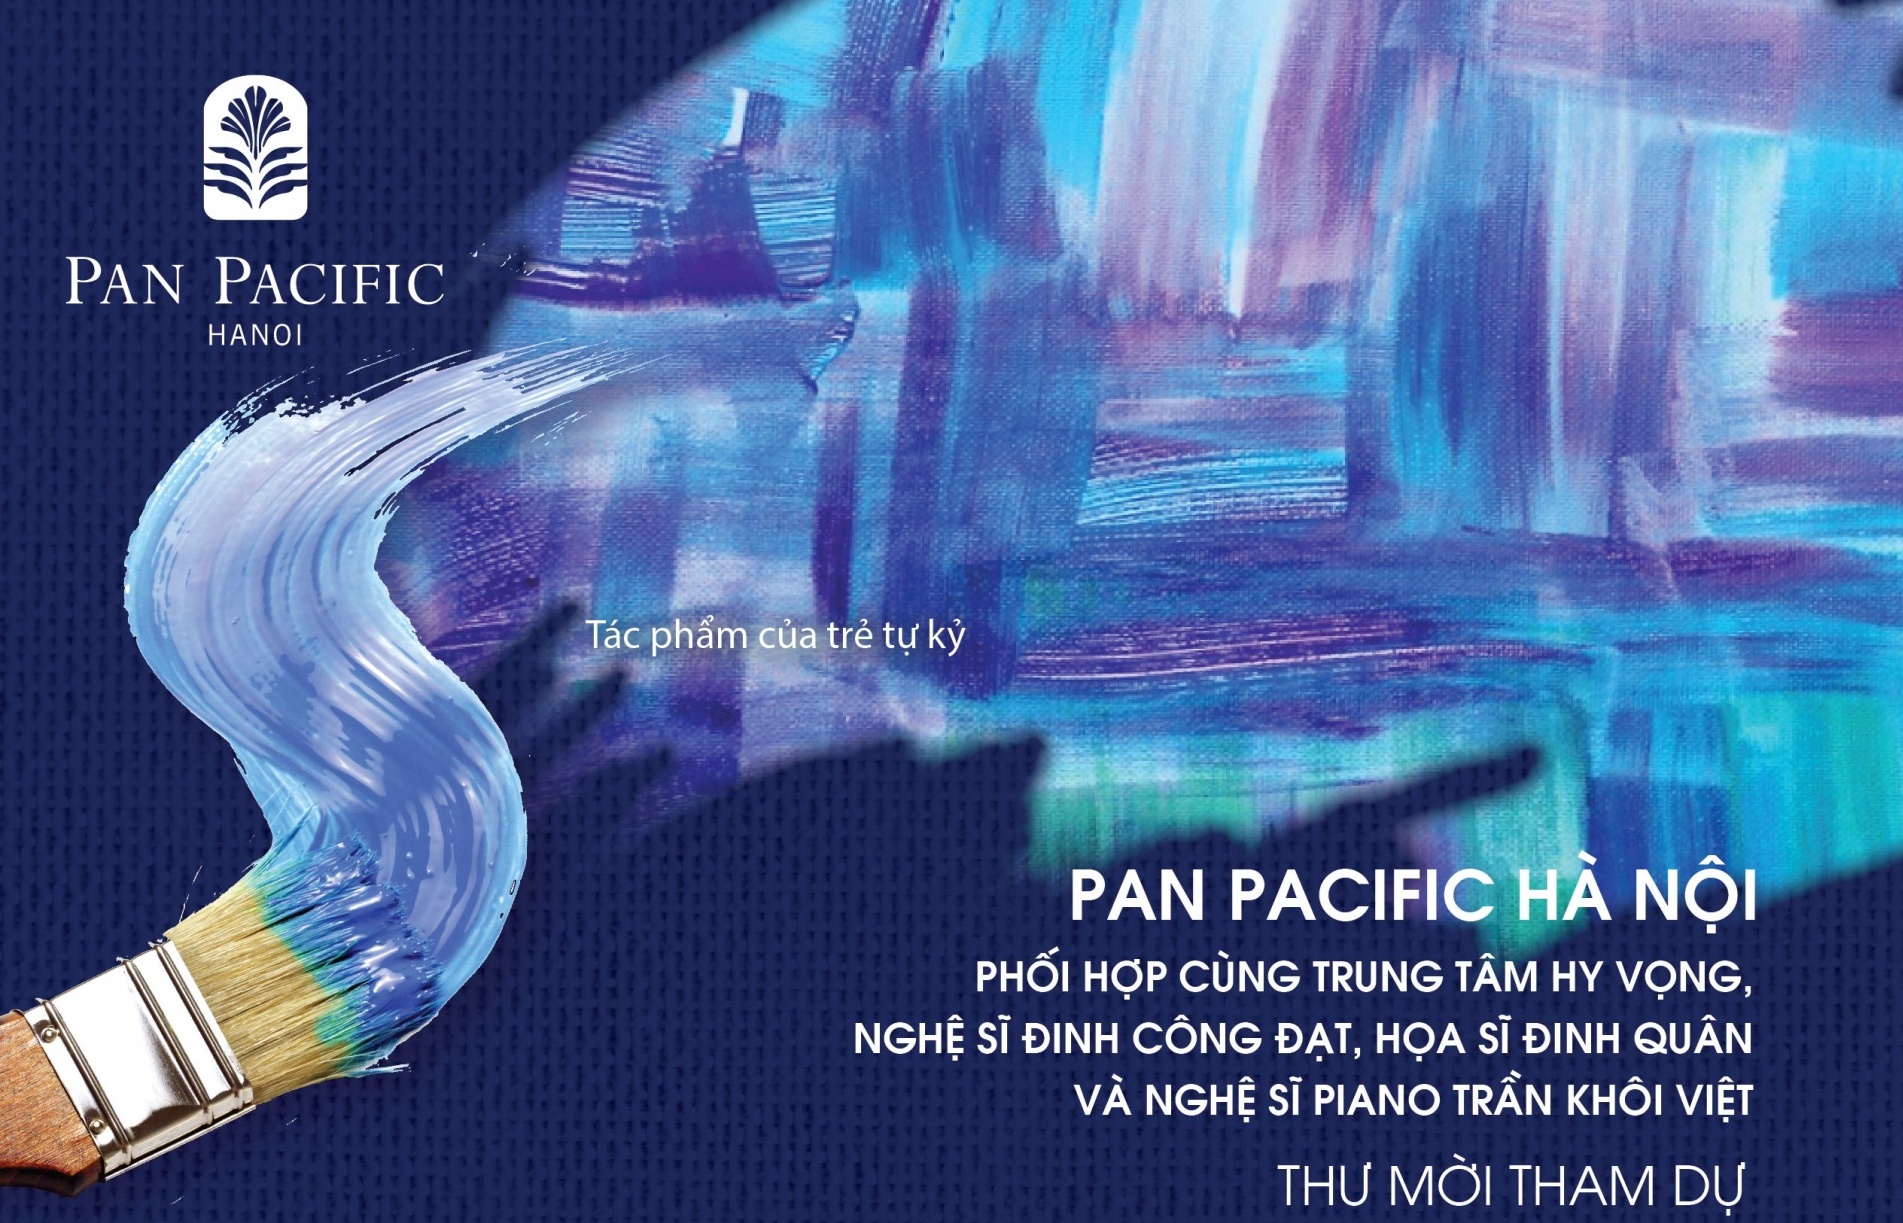 Pan Pacific Hanoi & Hope Centre present Heart For Autism art exhibition